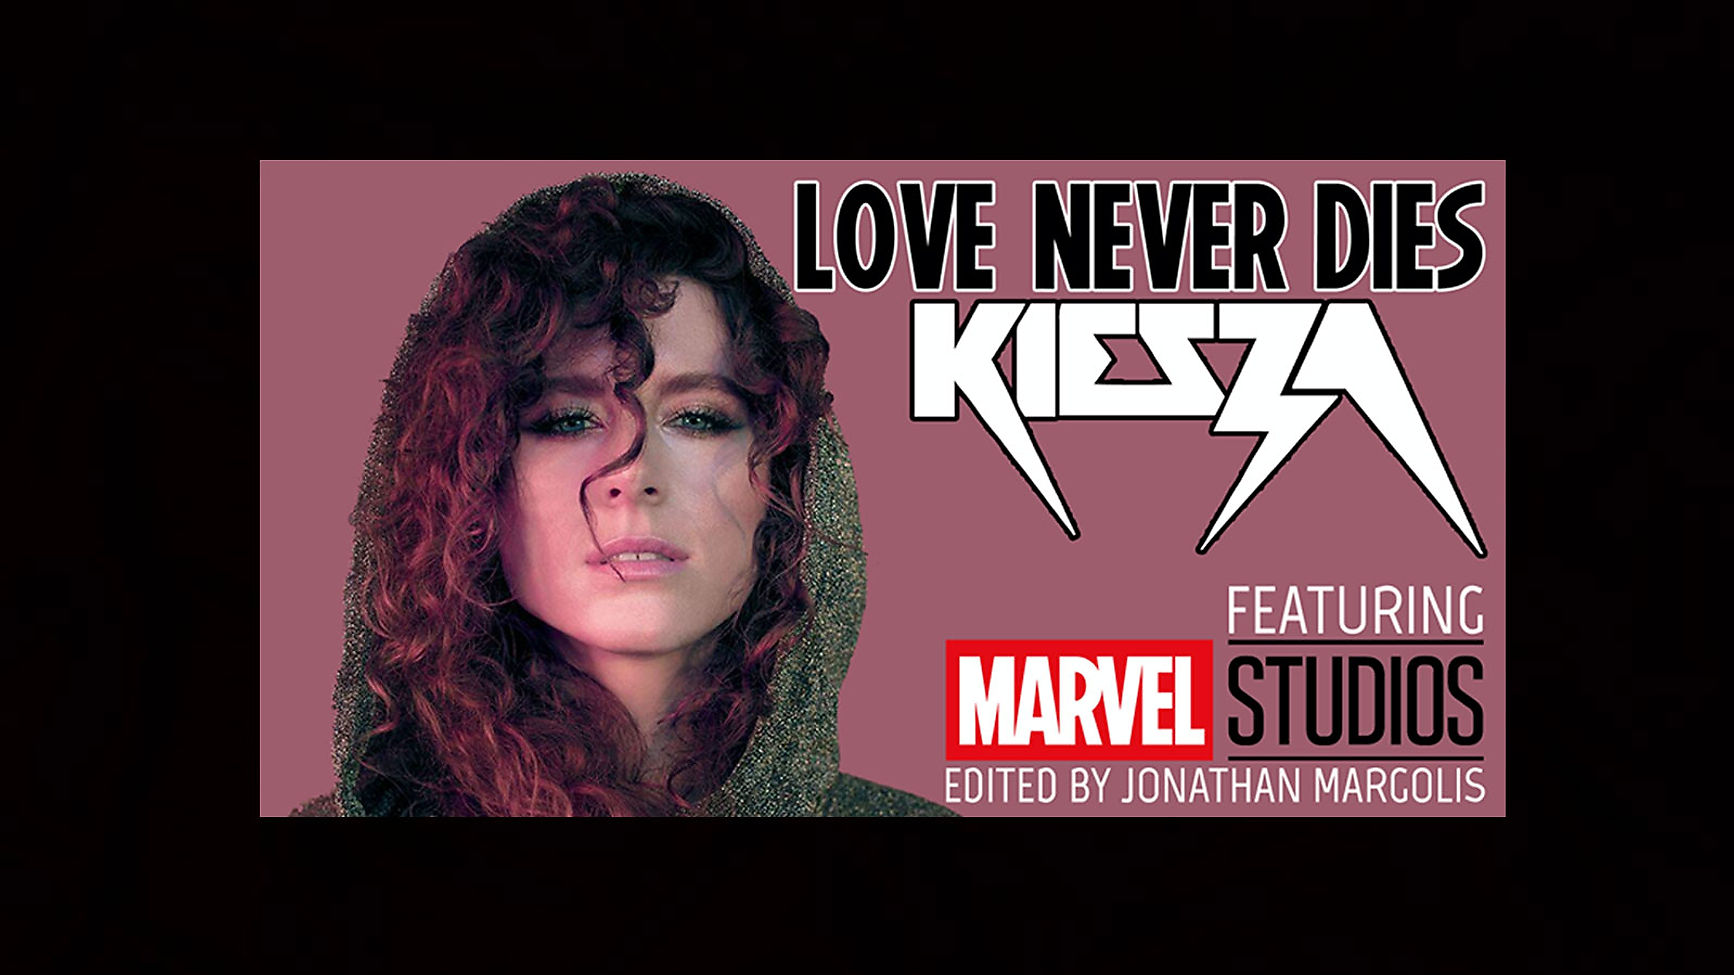 "Love Never Dies" by Kiesza feat. Marvel Studios